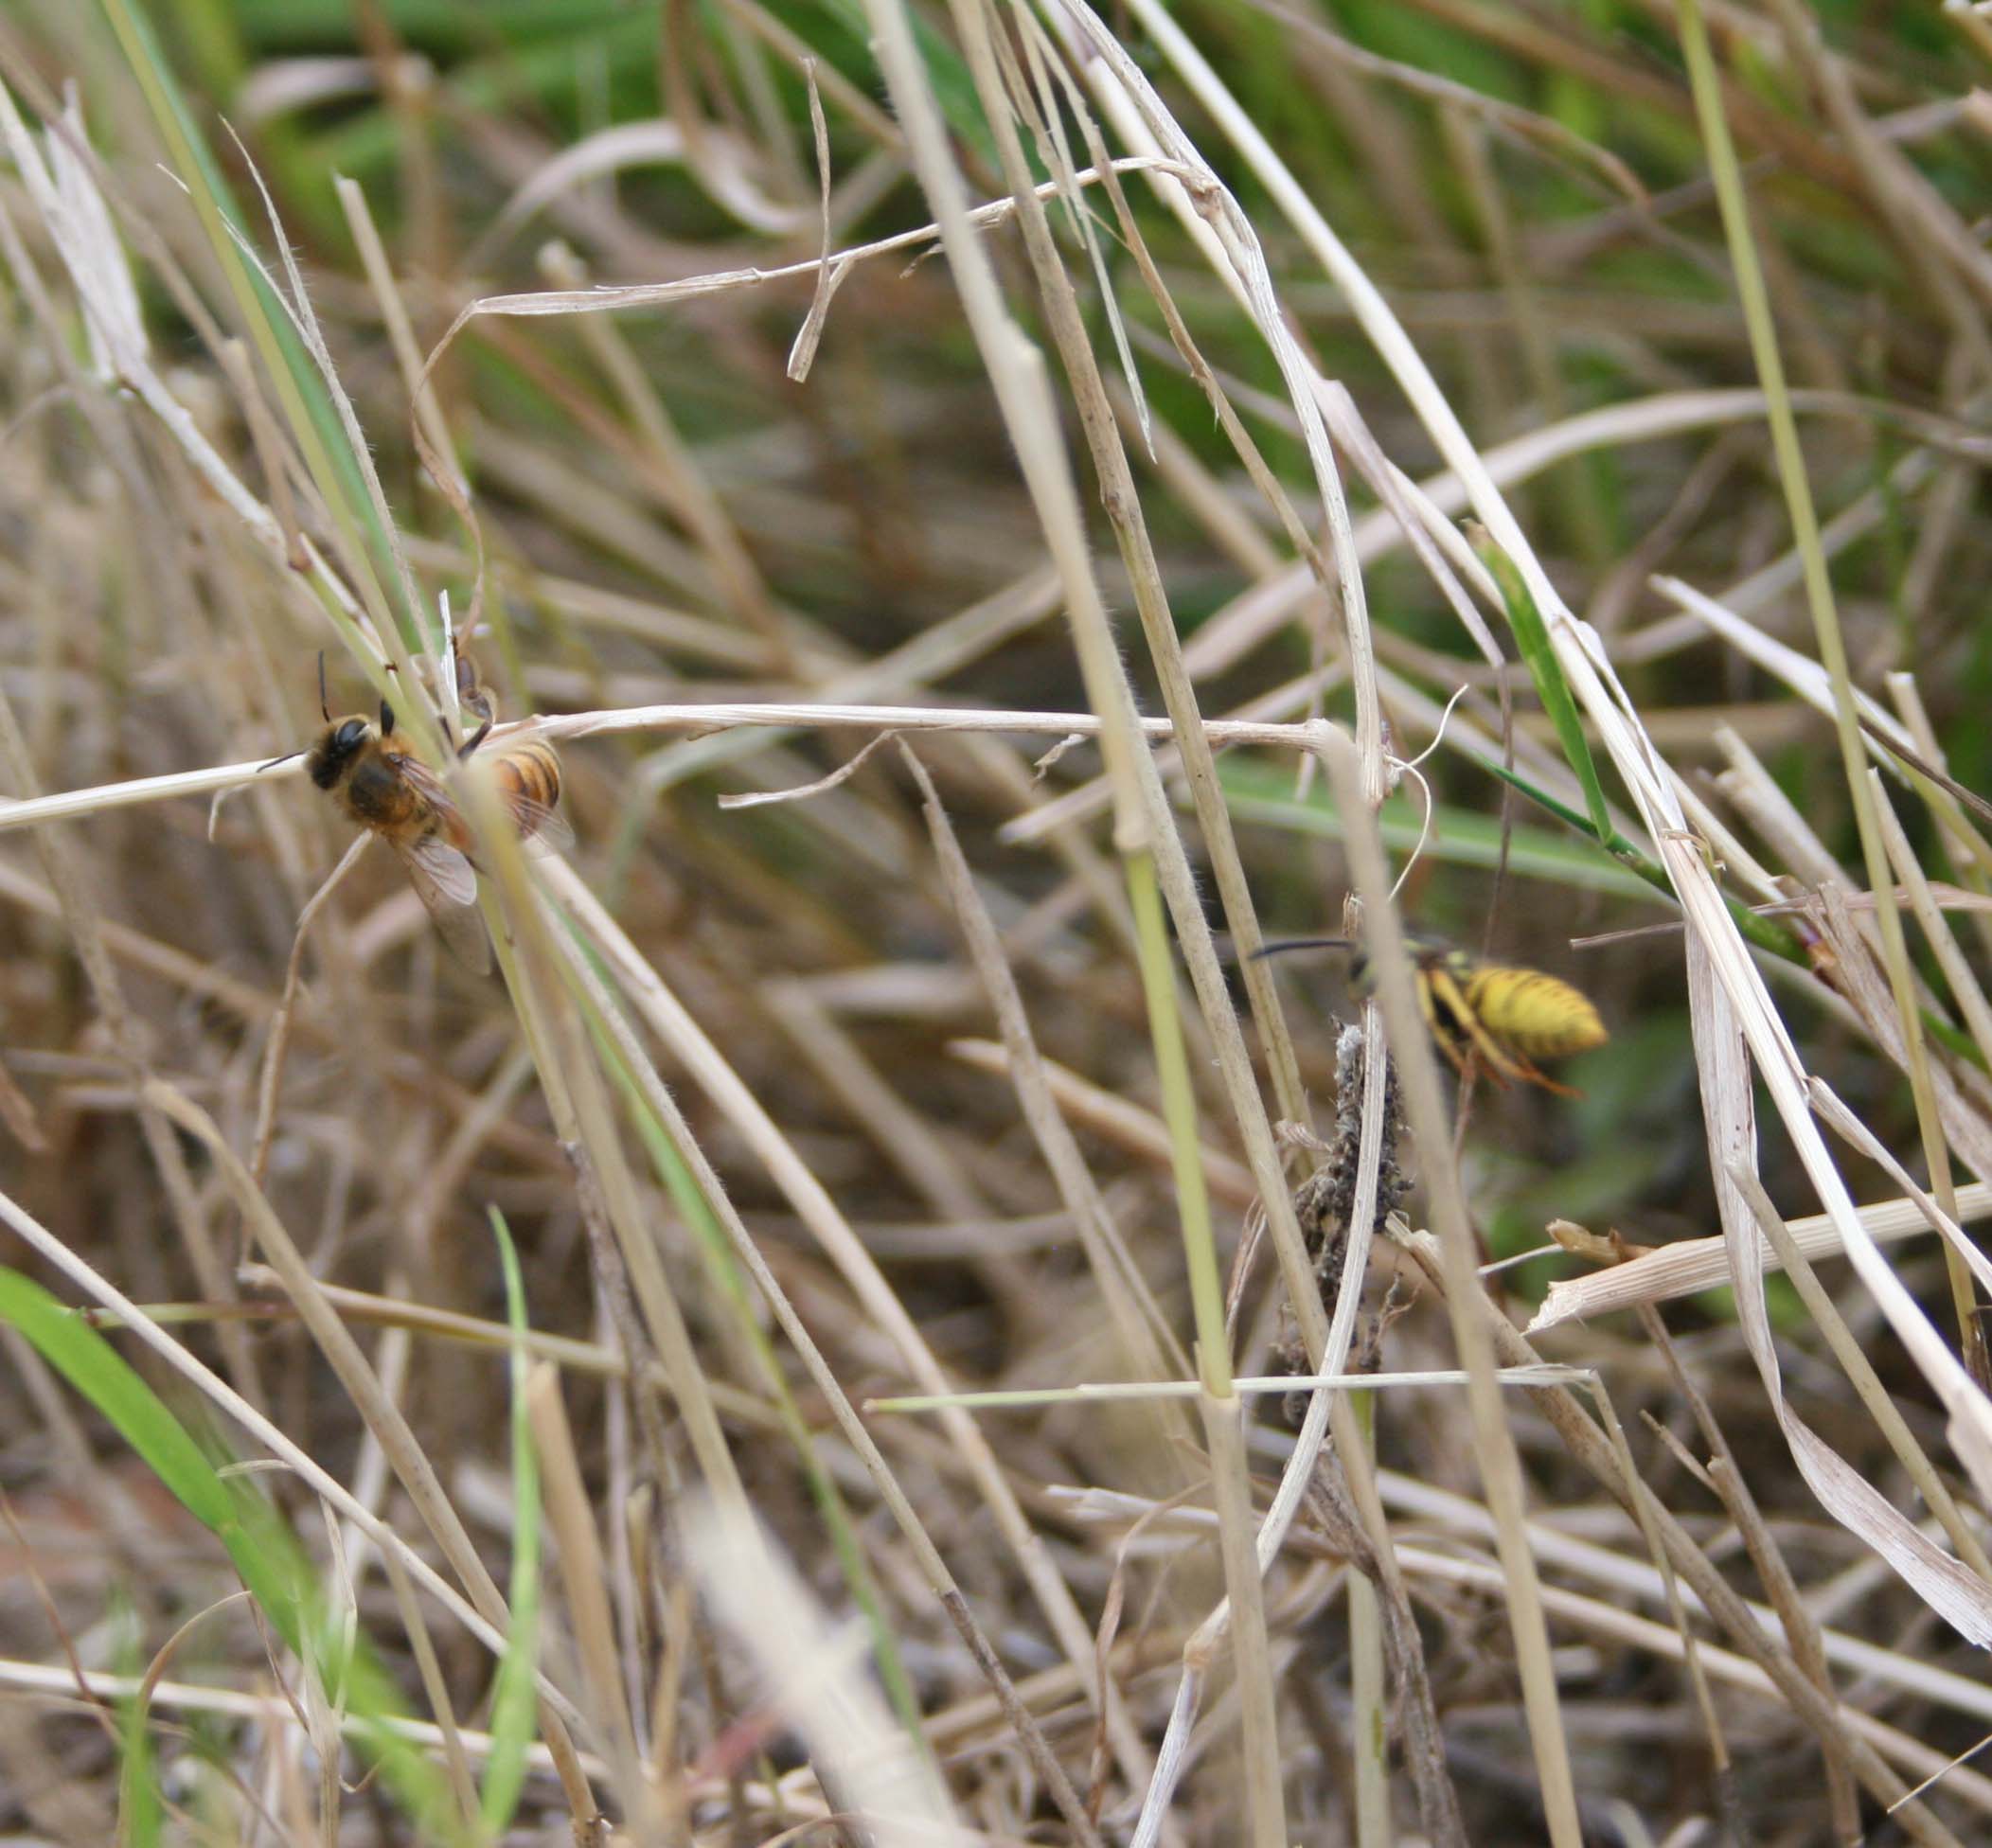 wasps-attacking-bees 086a.jpg